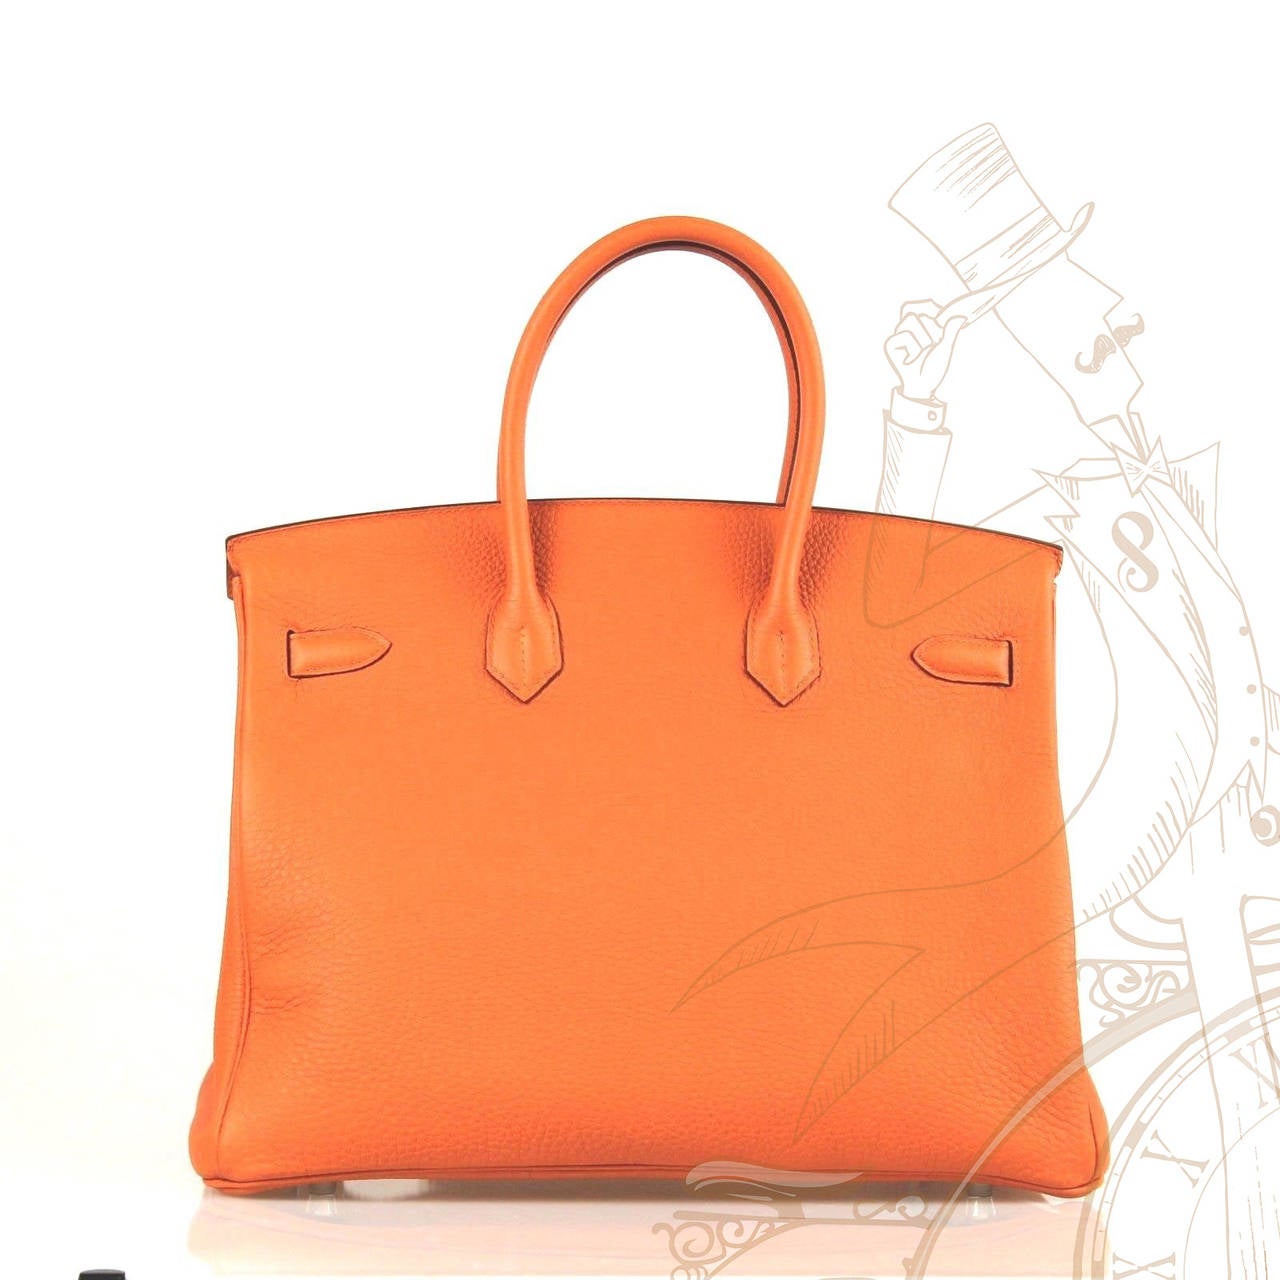 Women's Hermes Togo Leather Silver Hdw 35 Cm Birkin Orange Tote Bag For Sale